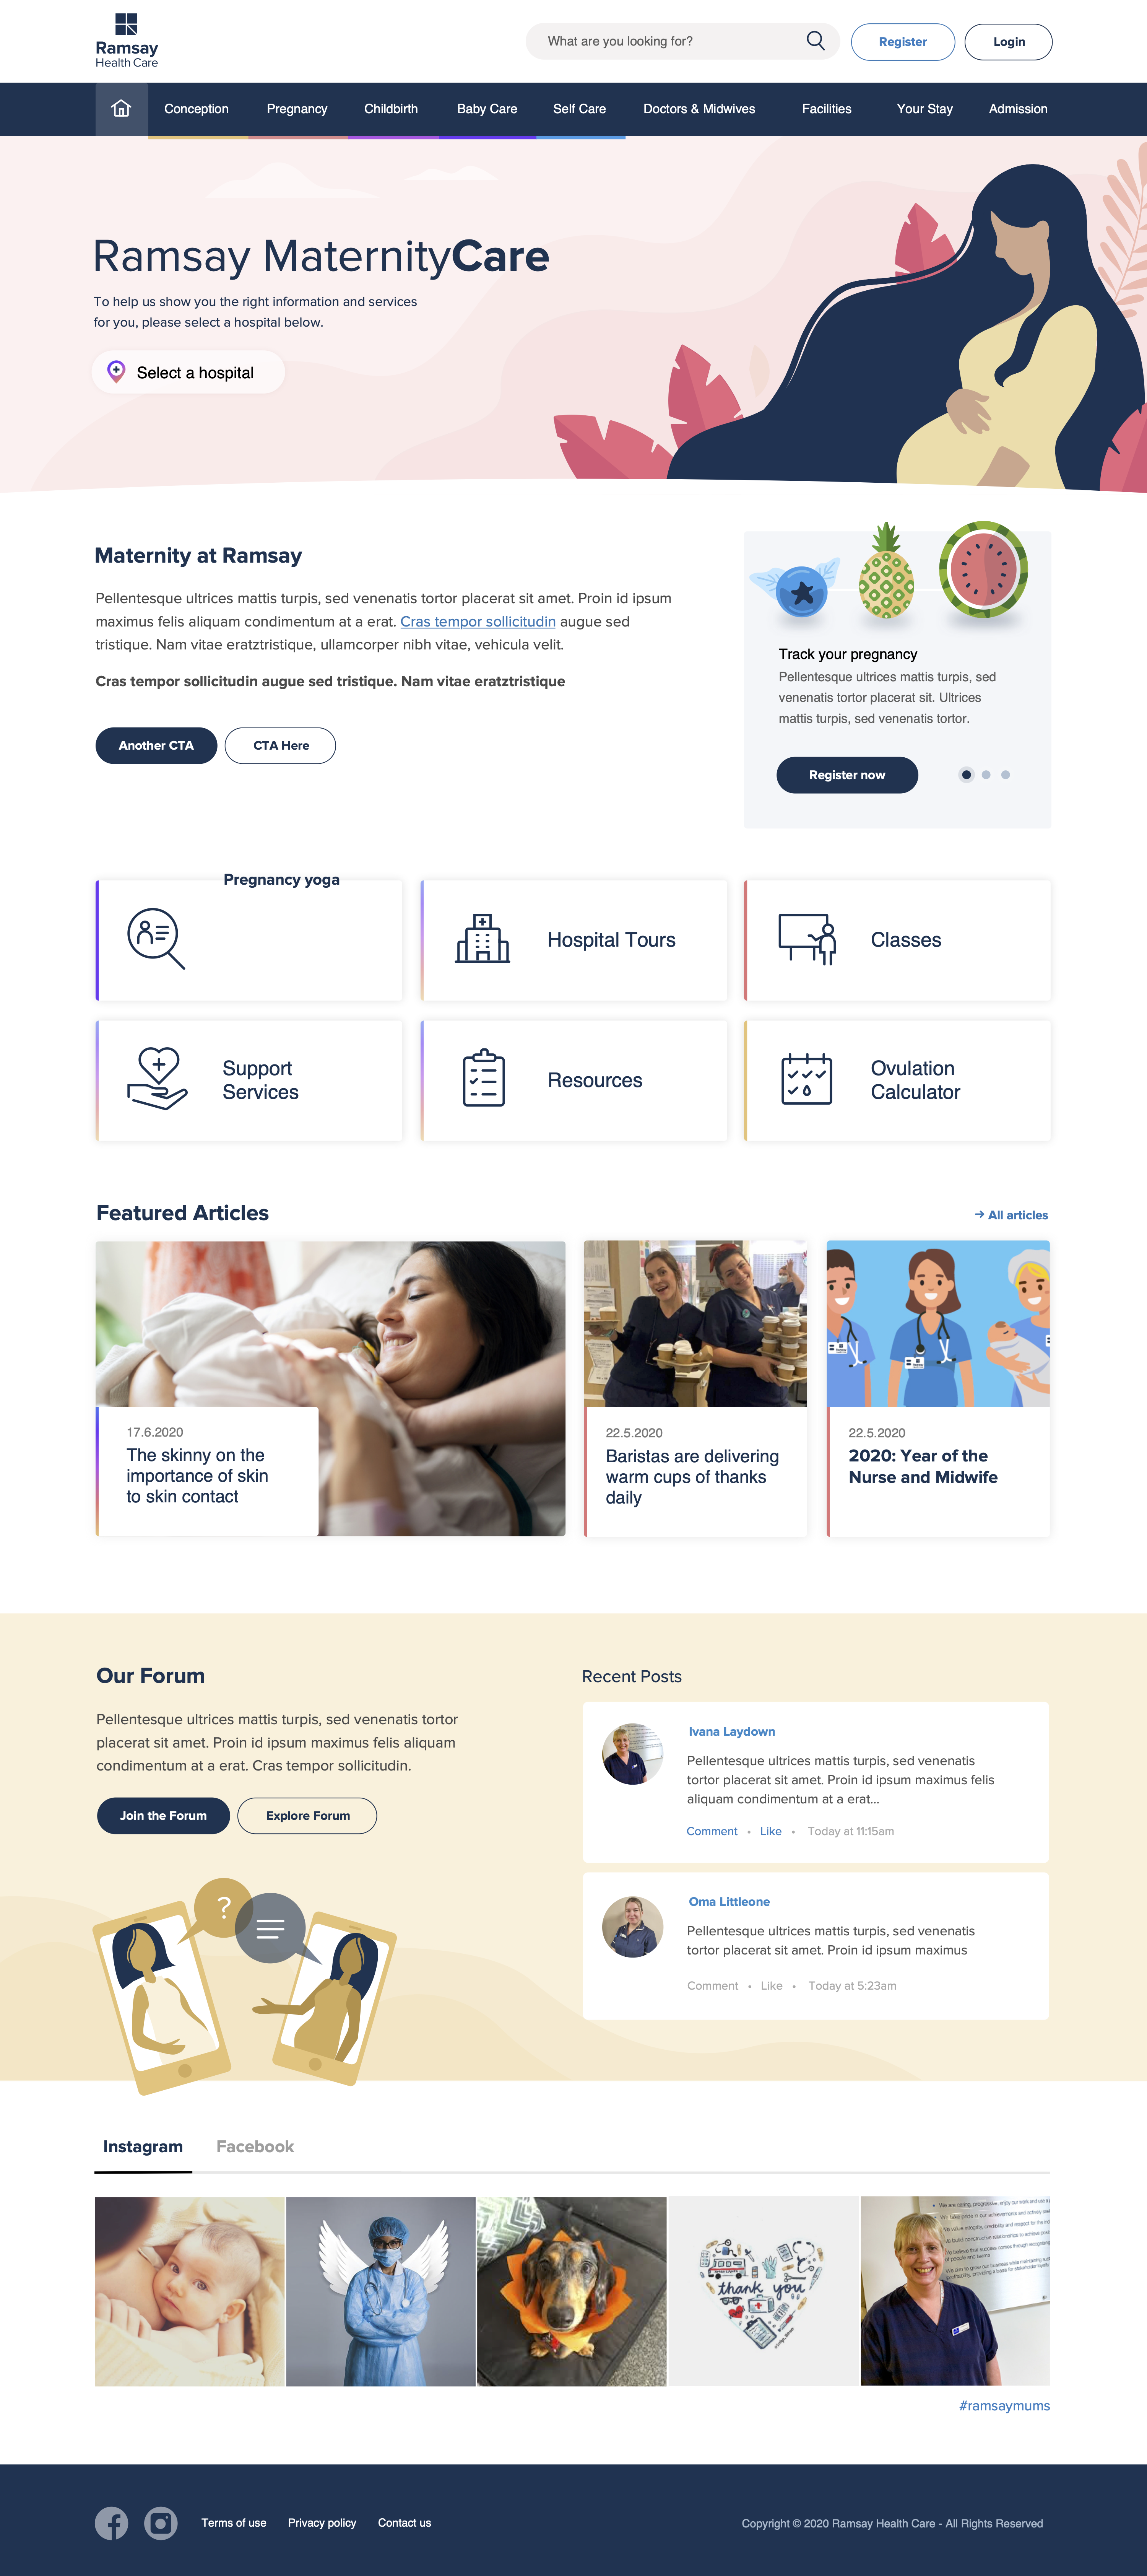 Ramsay - Maternity care community portal